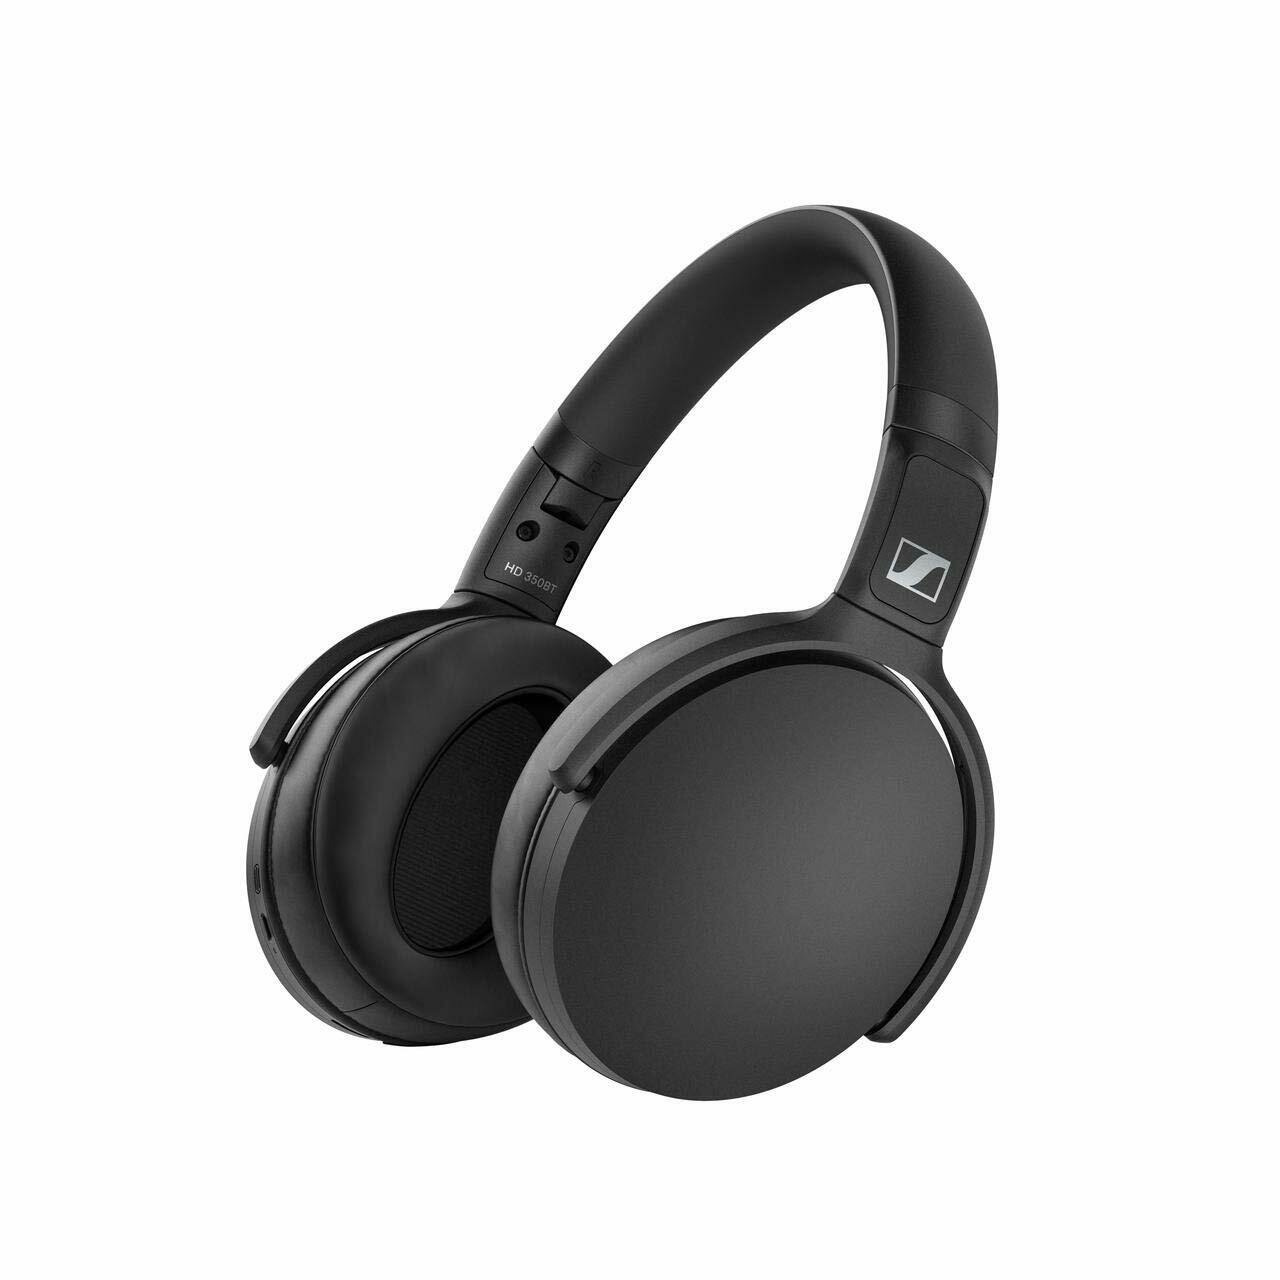 Sennheiser HD 350BT Wireless Over-Ear Headphones (Black)
#SEHD350BTB MFR #508384